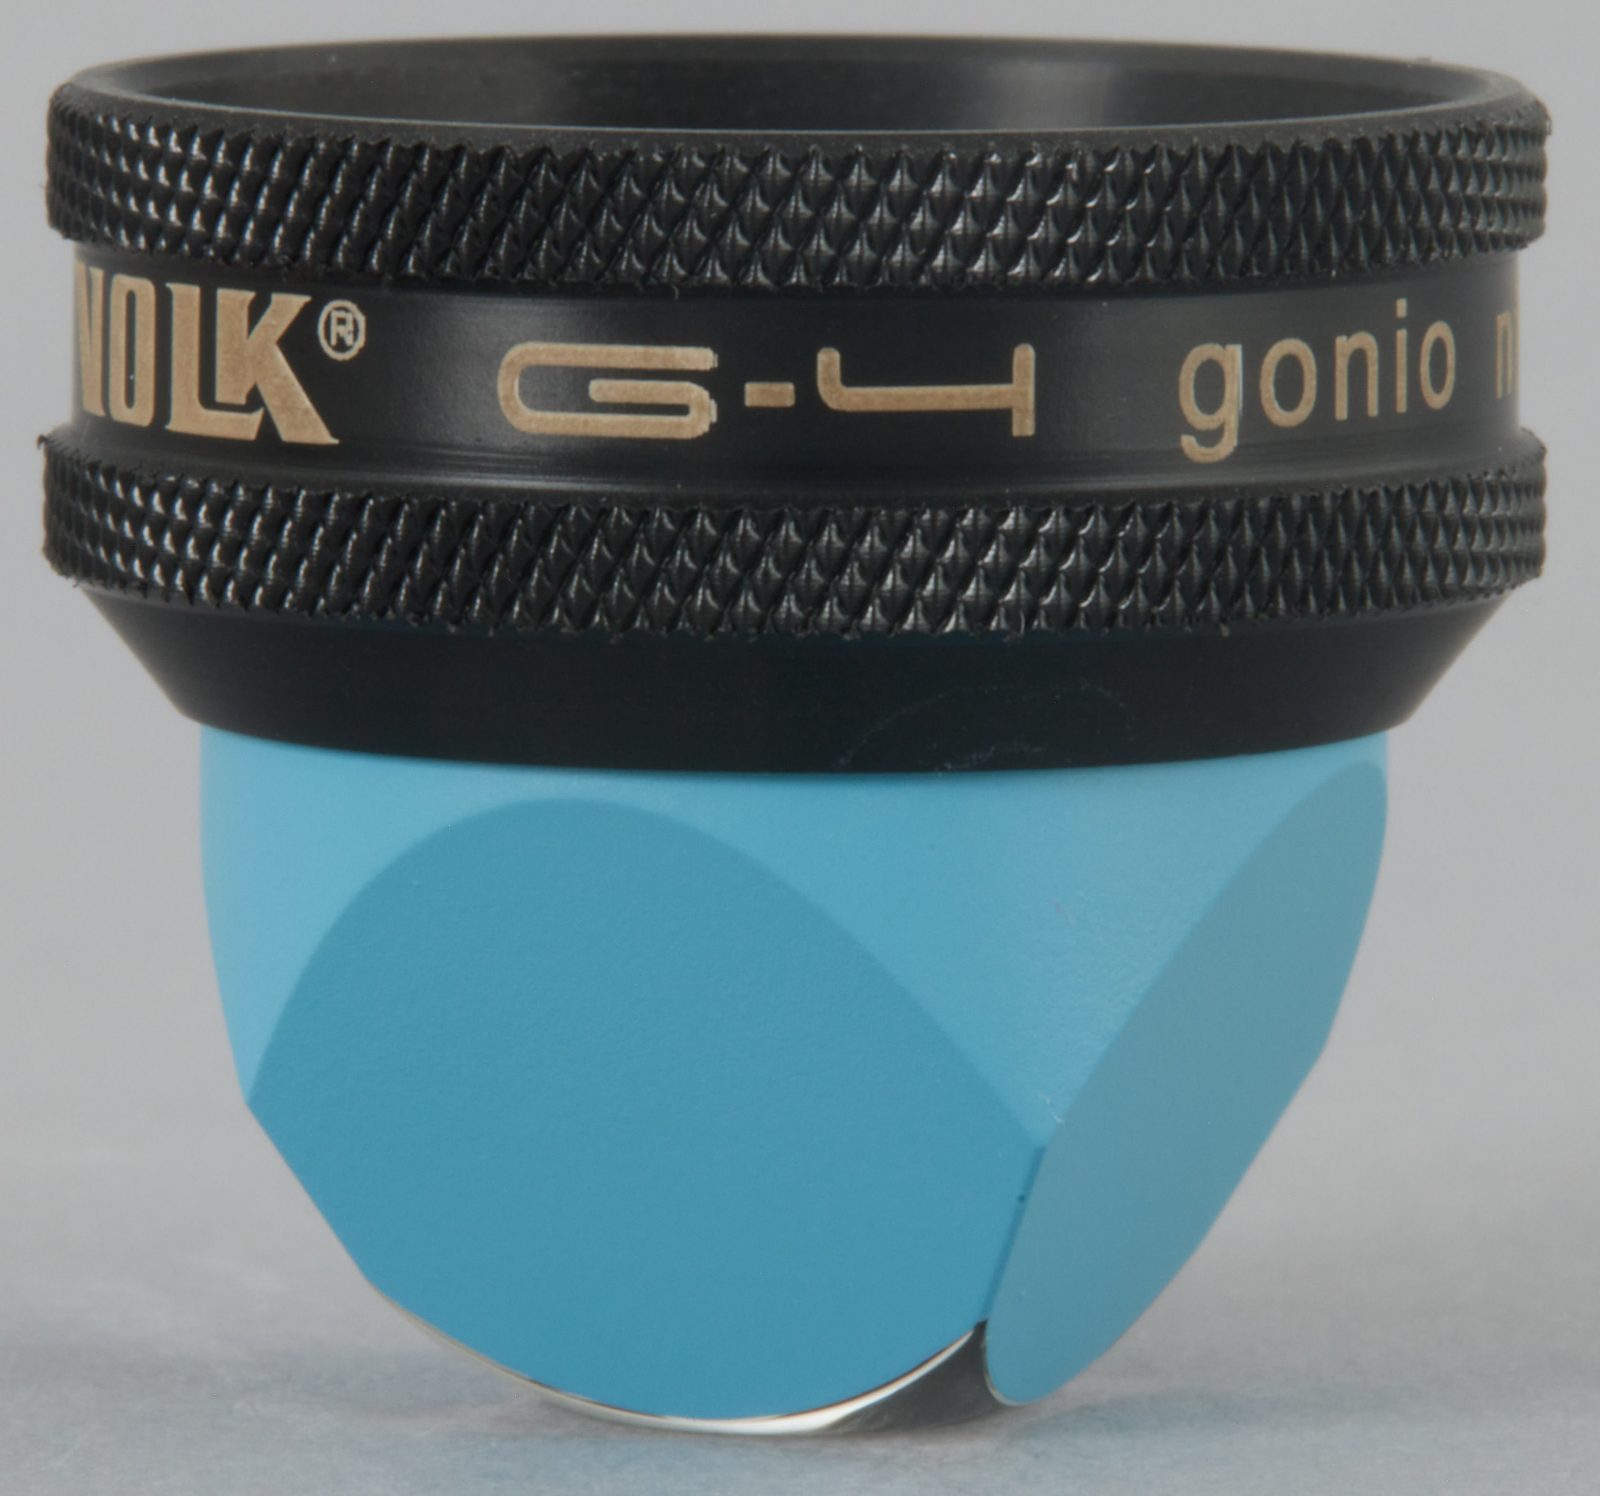 G-4 Gonio ( No Flange Large)